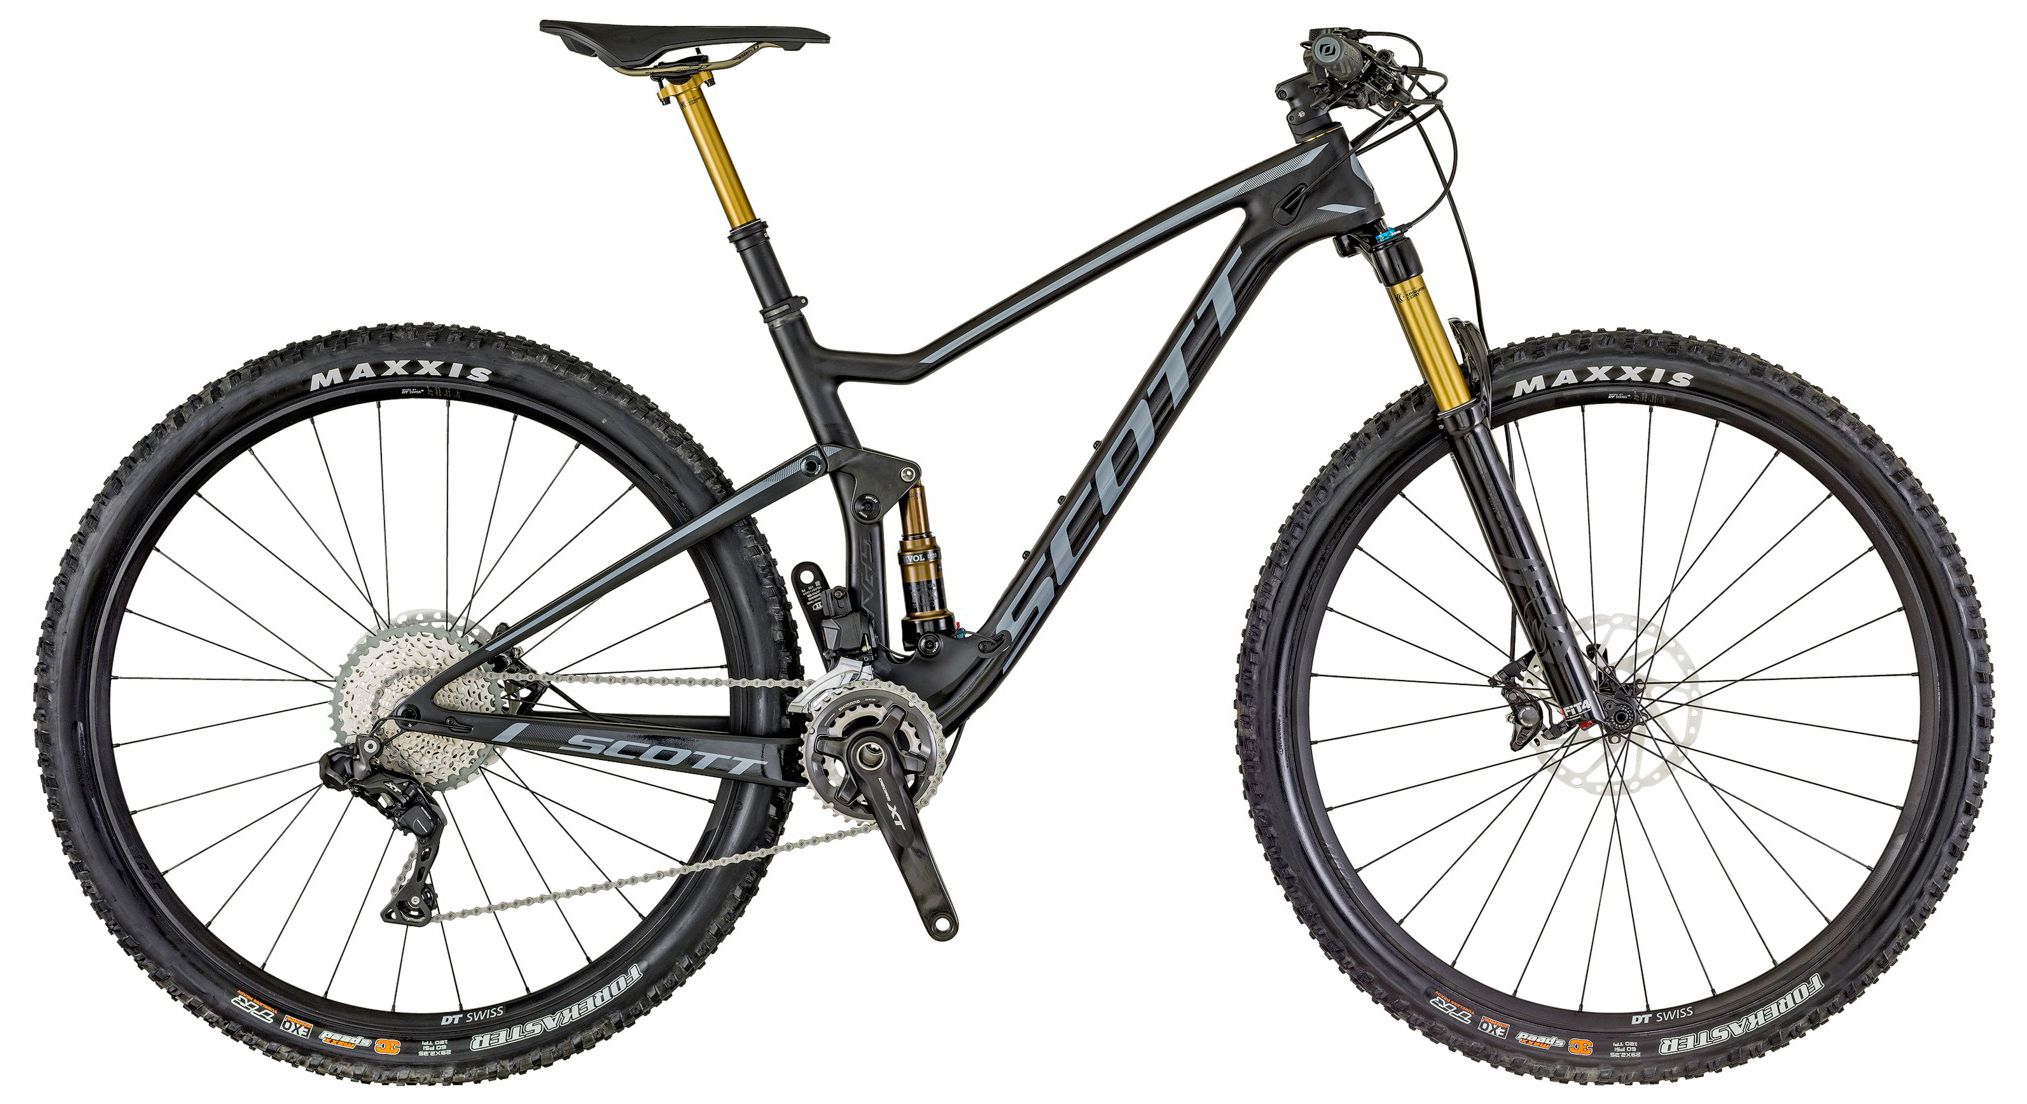  Отзывы о Горном велосипеде Scott Spark 900 Premium 2018